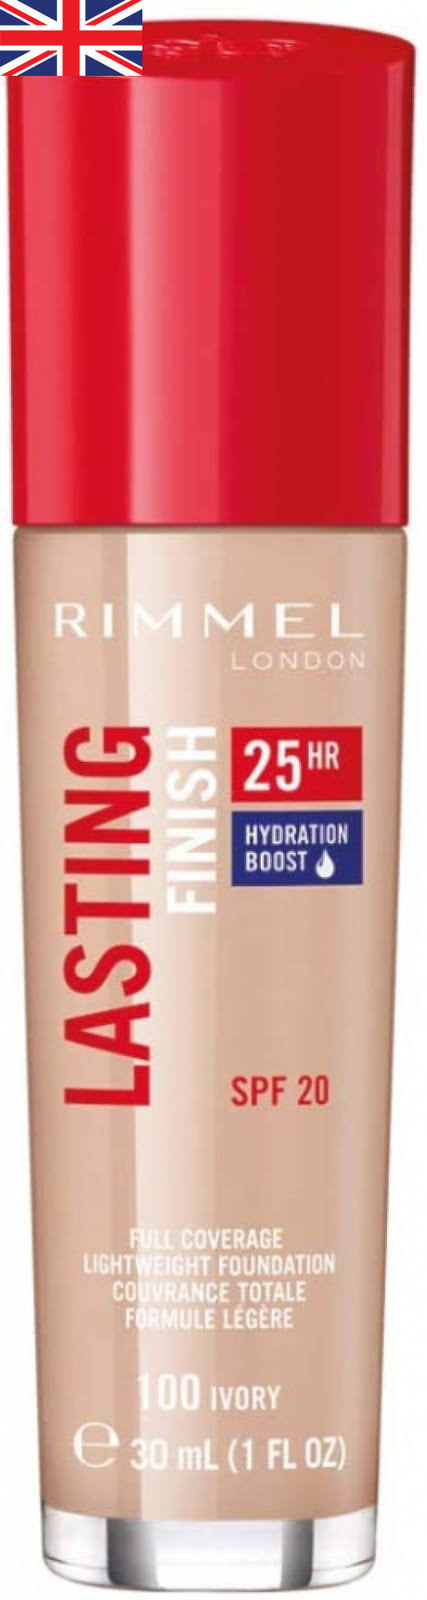 Rimmel London Lasting Finish 25hr with Comfort Serum SPF 20 - 100 Ivory